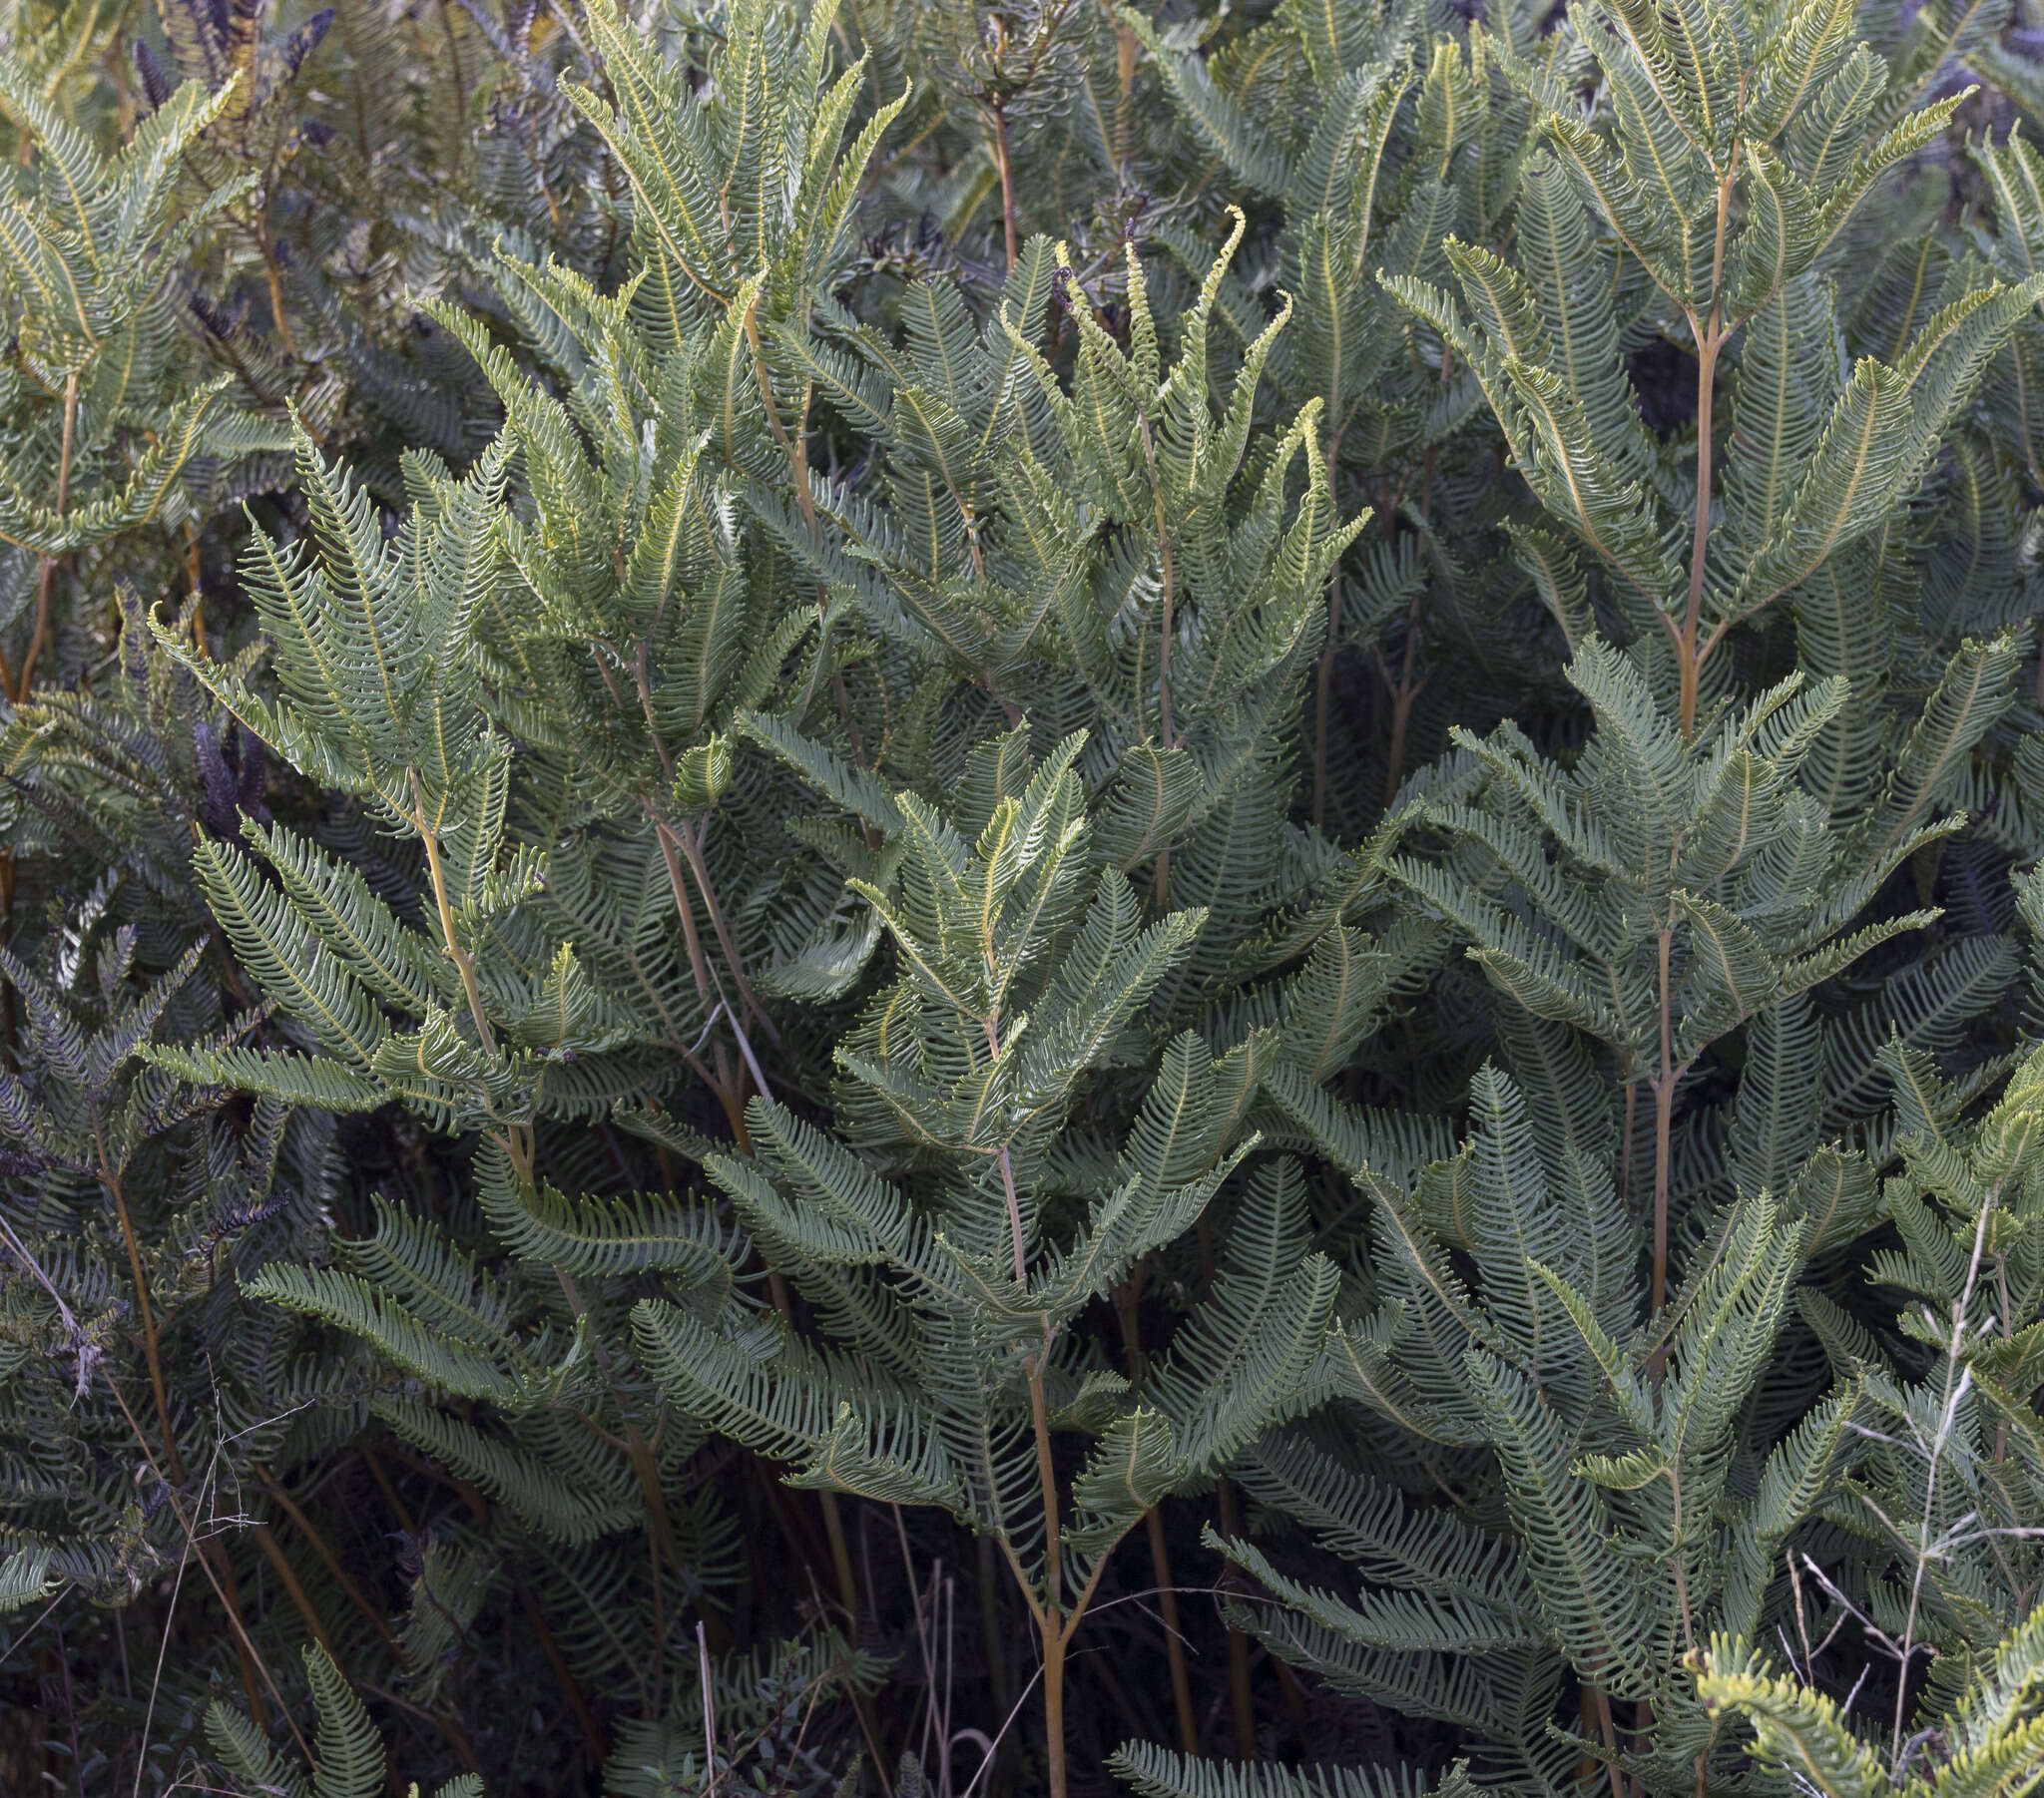 Image of Sticherus cryptocarpus (Hook.) Ching